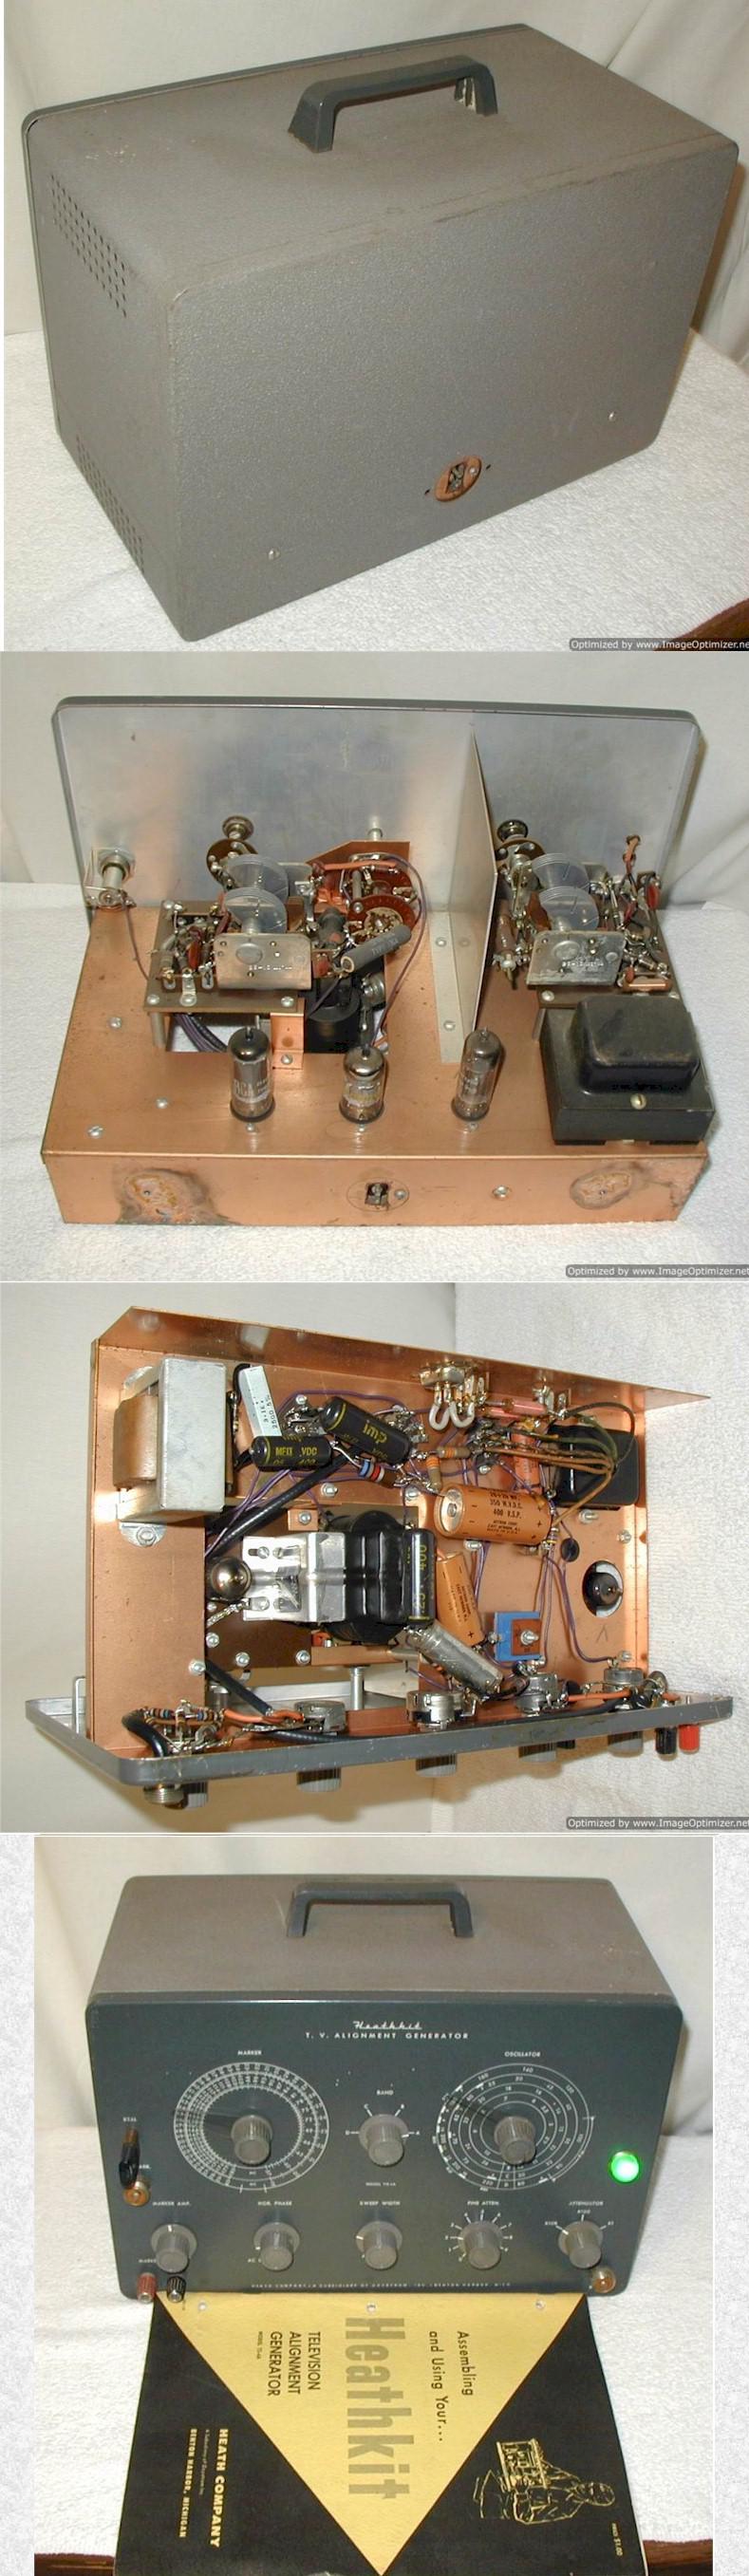 Heathkit TS-4A Television Alignment Generator (1957)